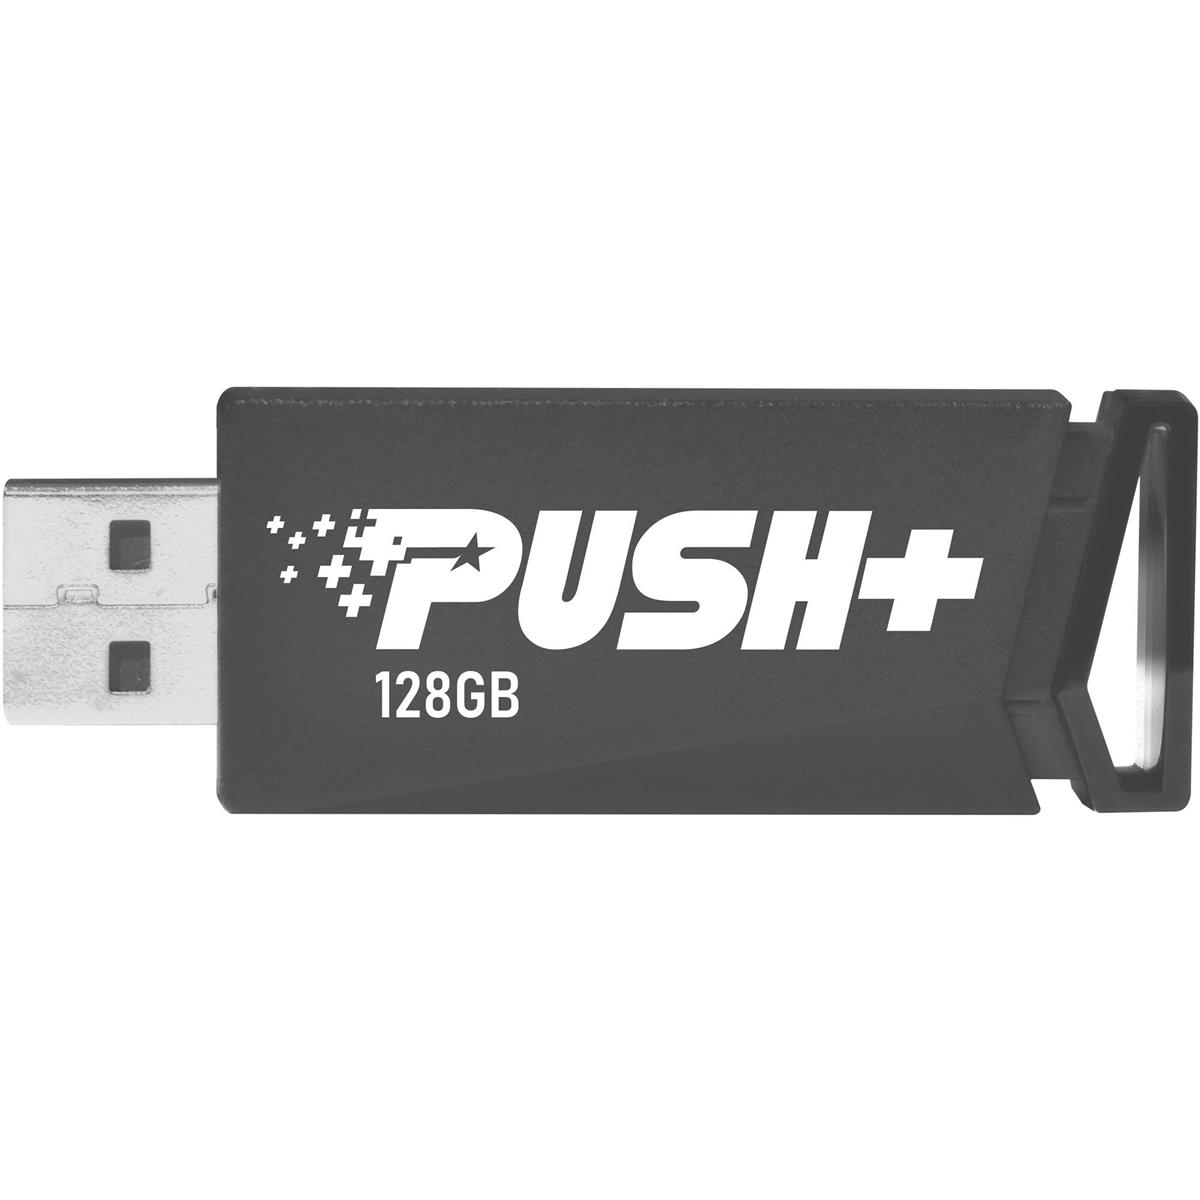 Image of Patriot Memory 128GB Push+ USB 3.2 Gen 1 Flash Drive